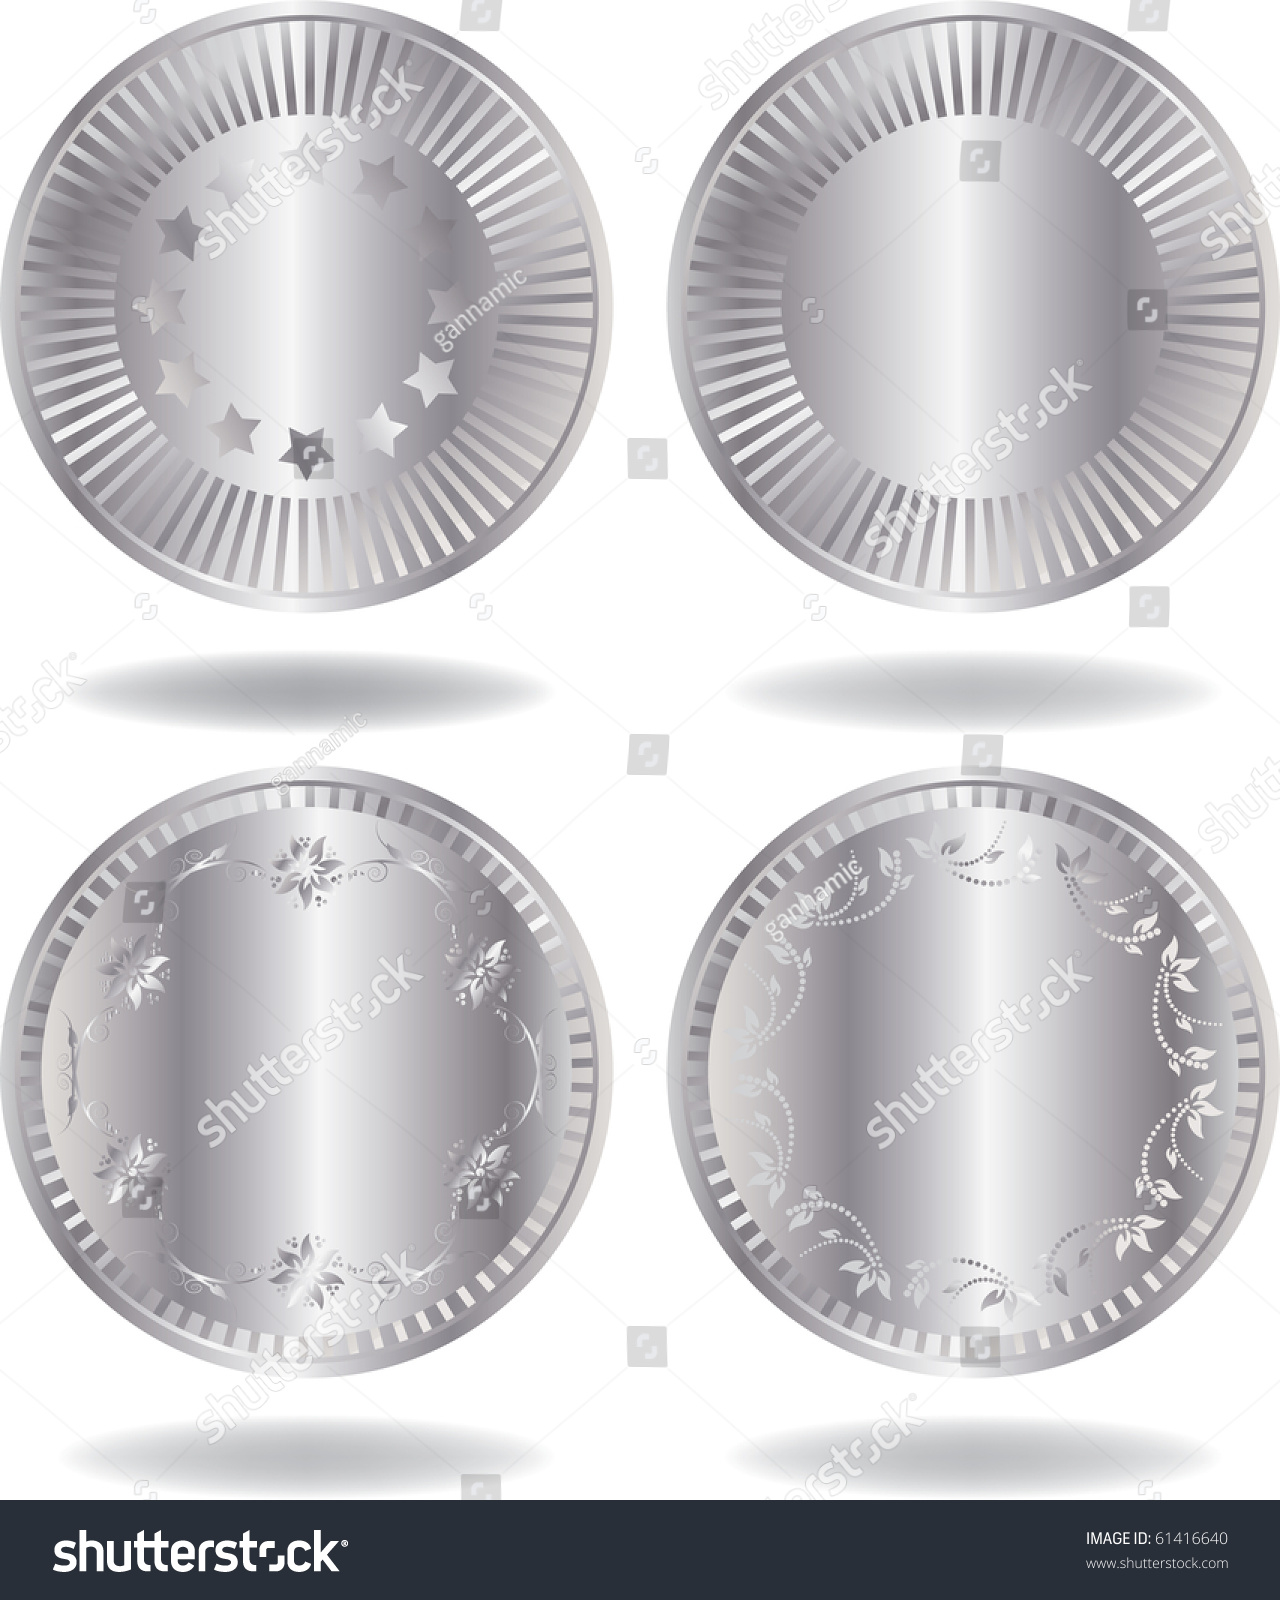 Silver Coins Set Various Variants Design Stock Vector 61416640 ...